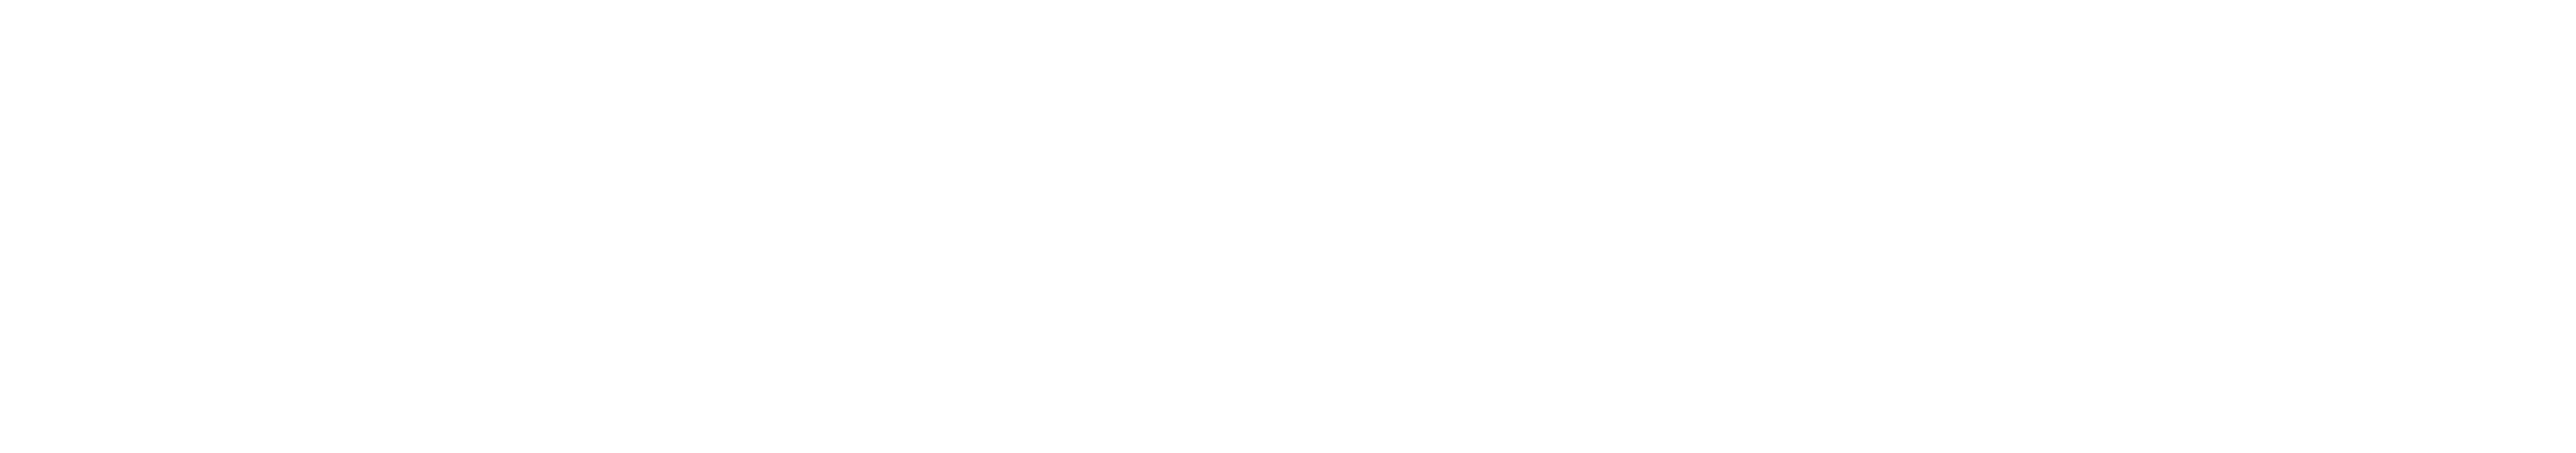 Frisørsalon Sadon logo